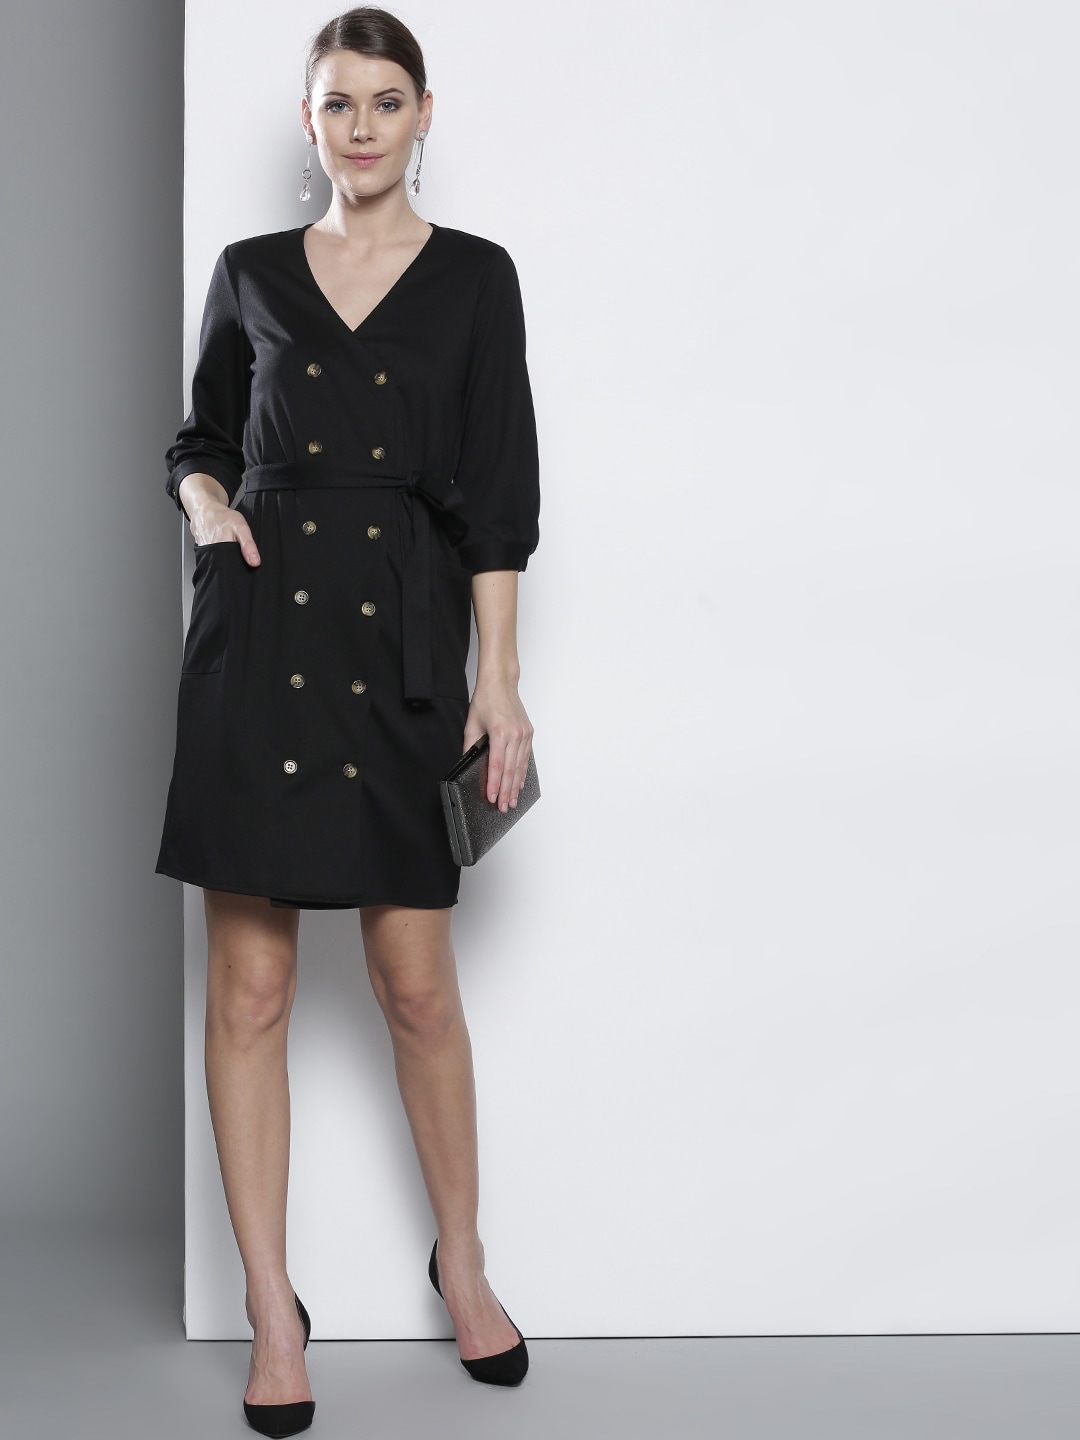 OYes Shopee | DOROTHY PERKINS Women Black Solid Wrap Dress